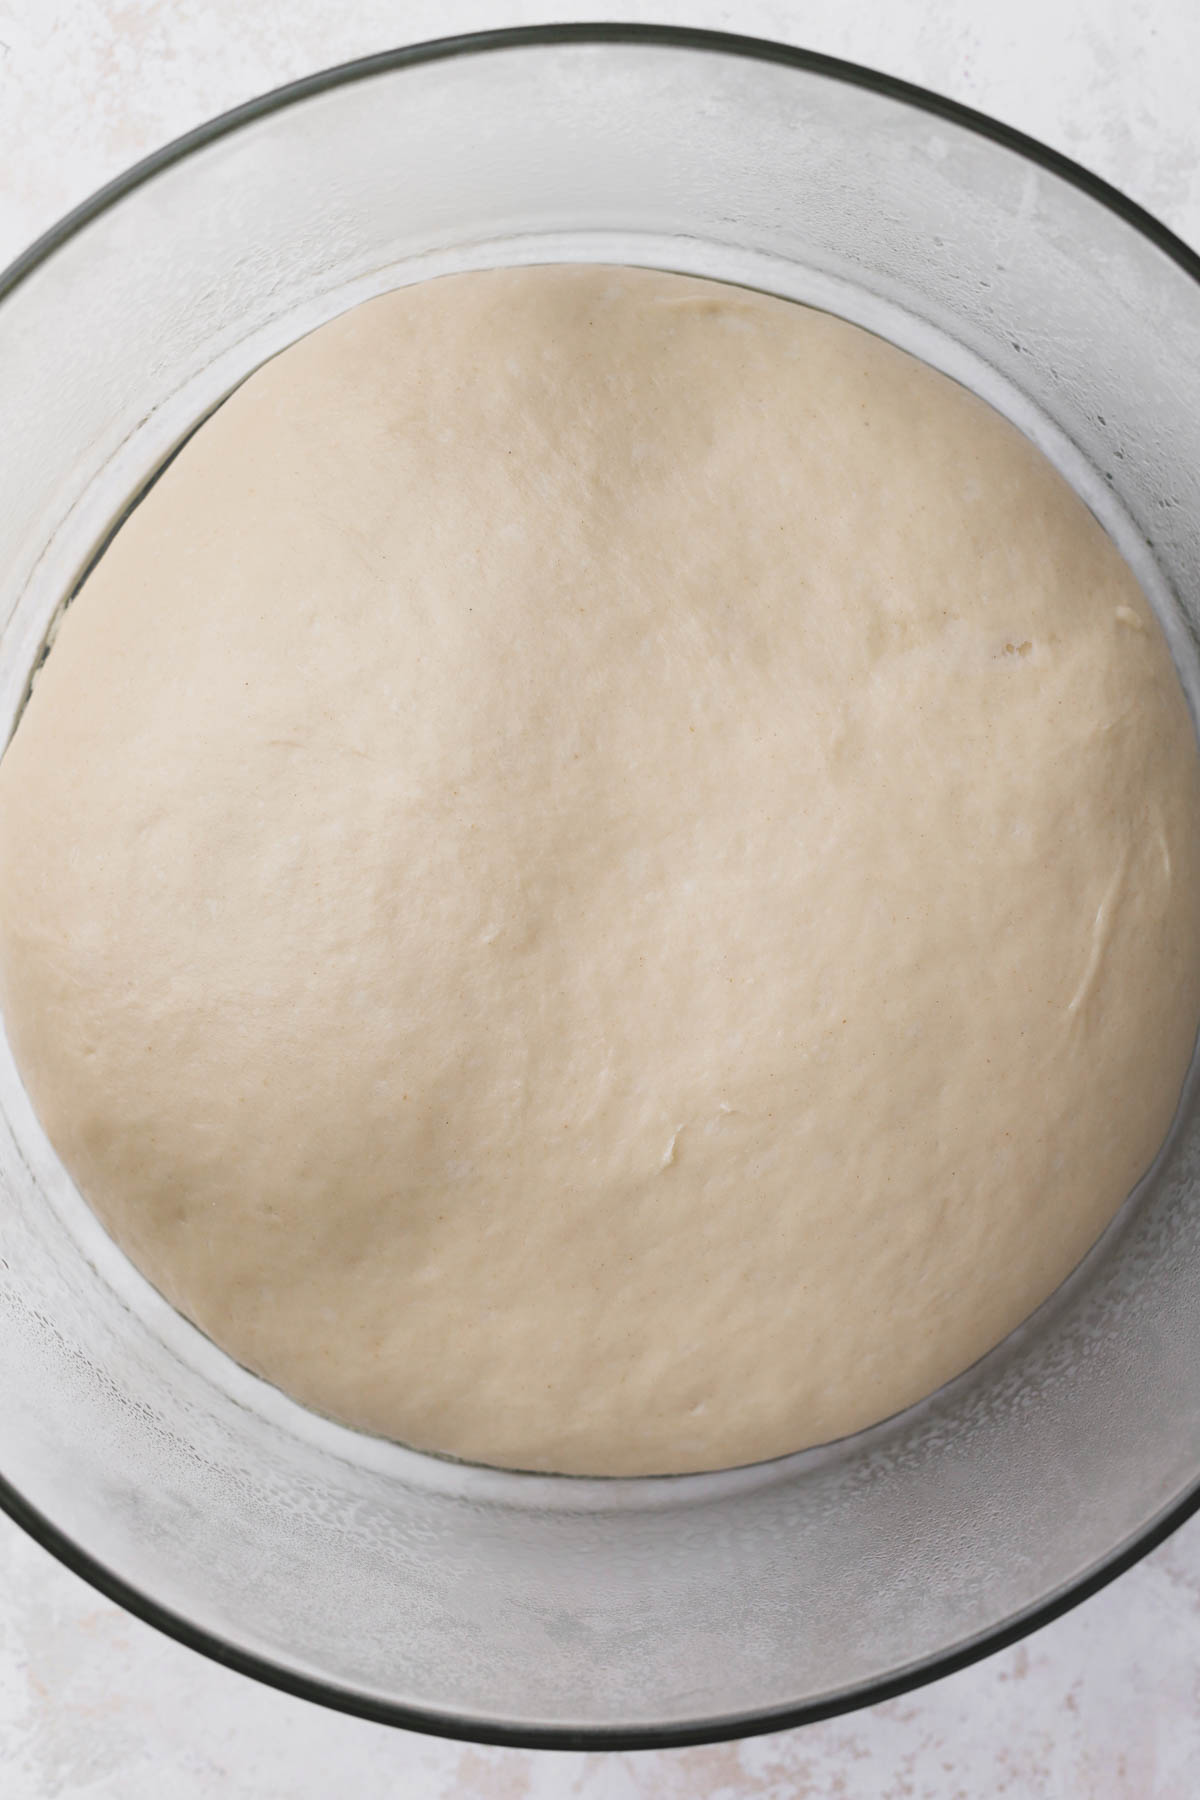 Risen cinnamon roll dough. 